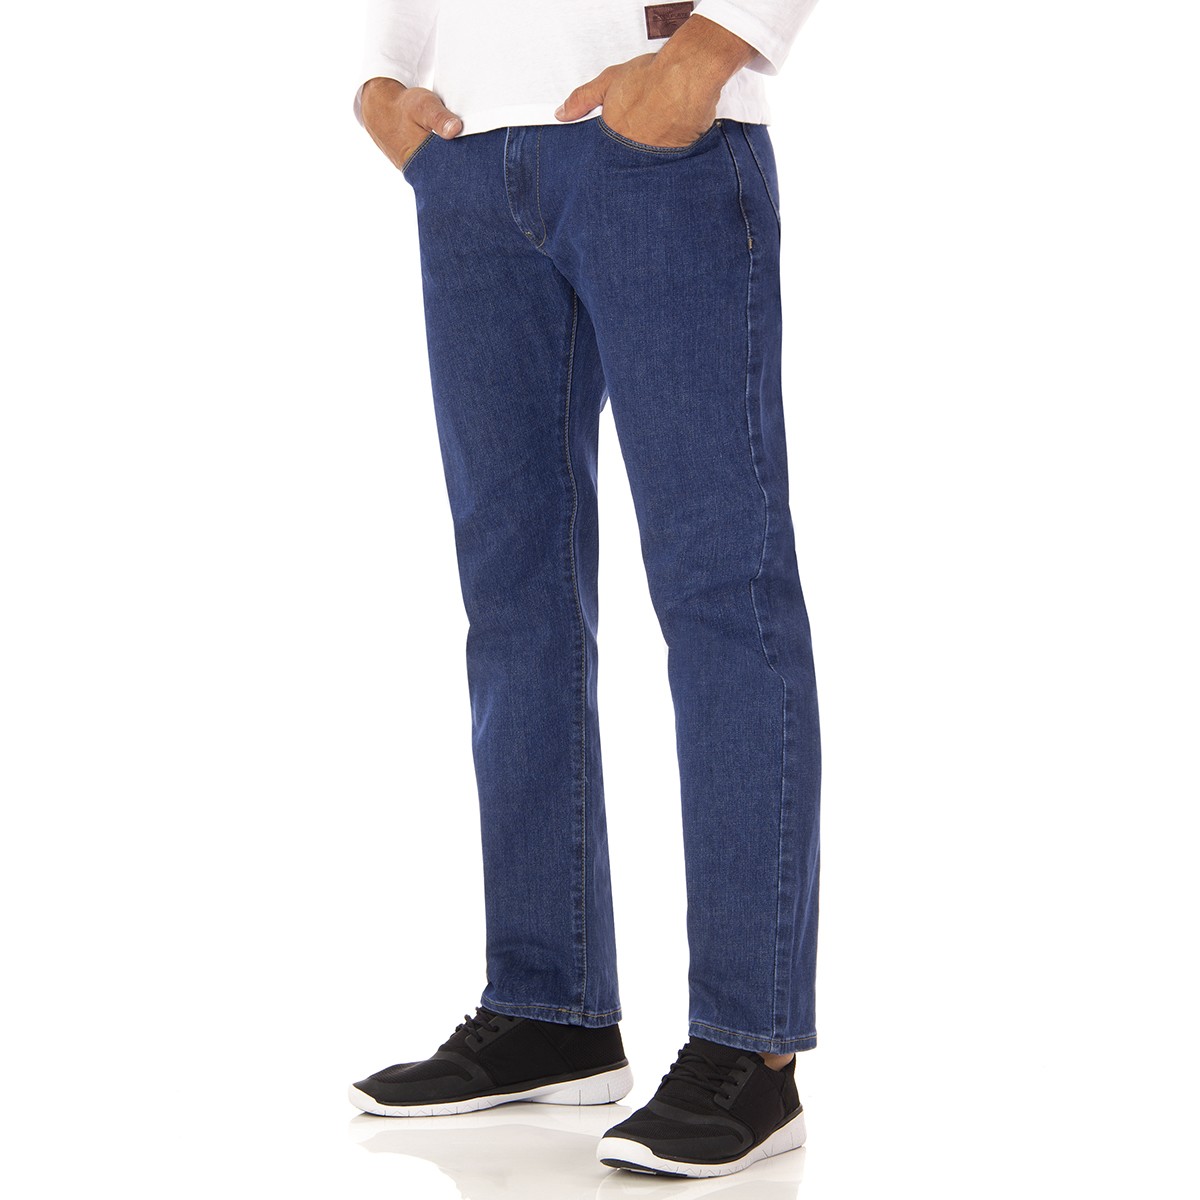 Mens Jeans Crotch 1801 Silver Plate Regular Slim Fit